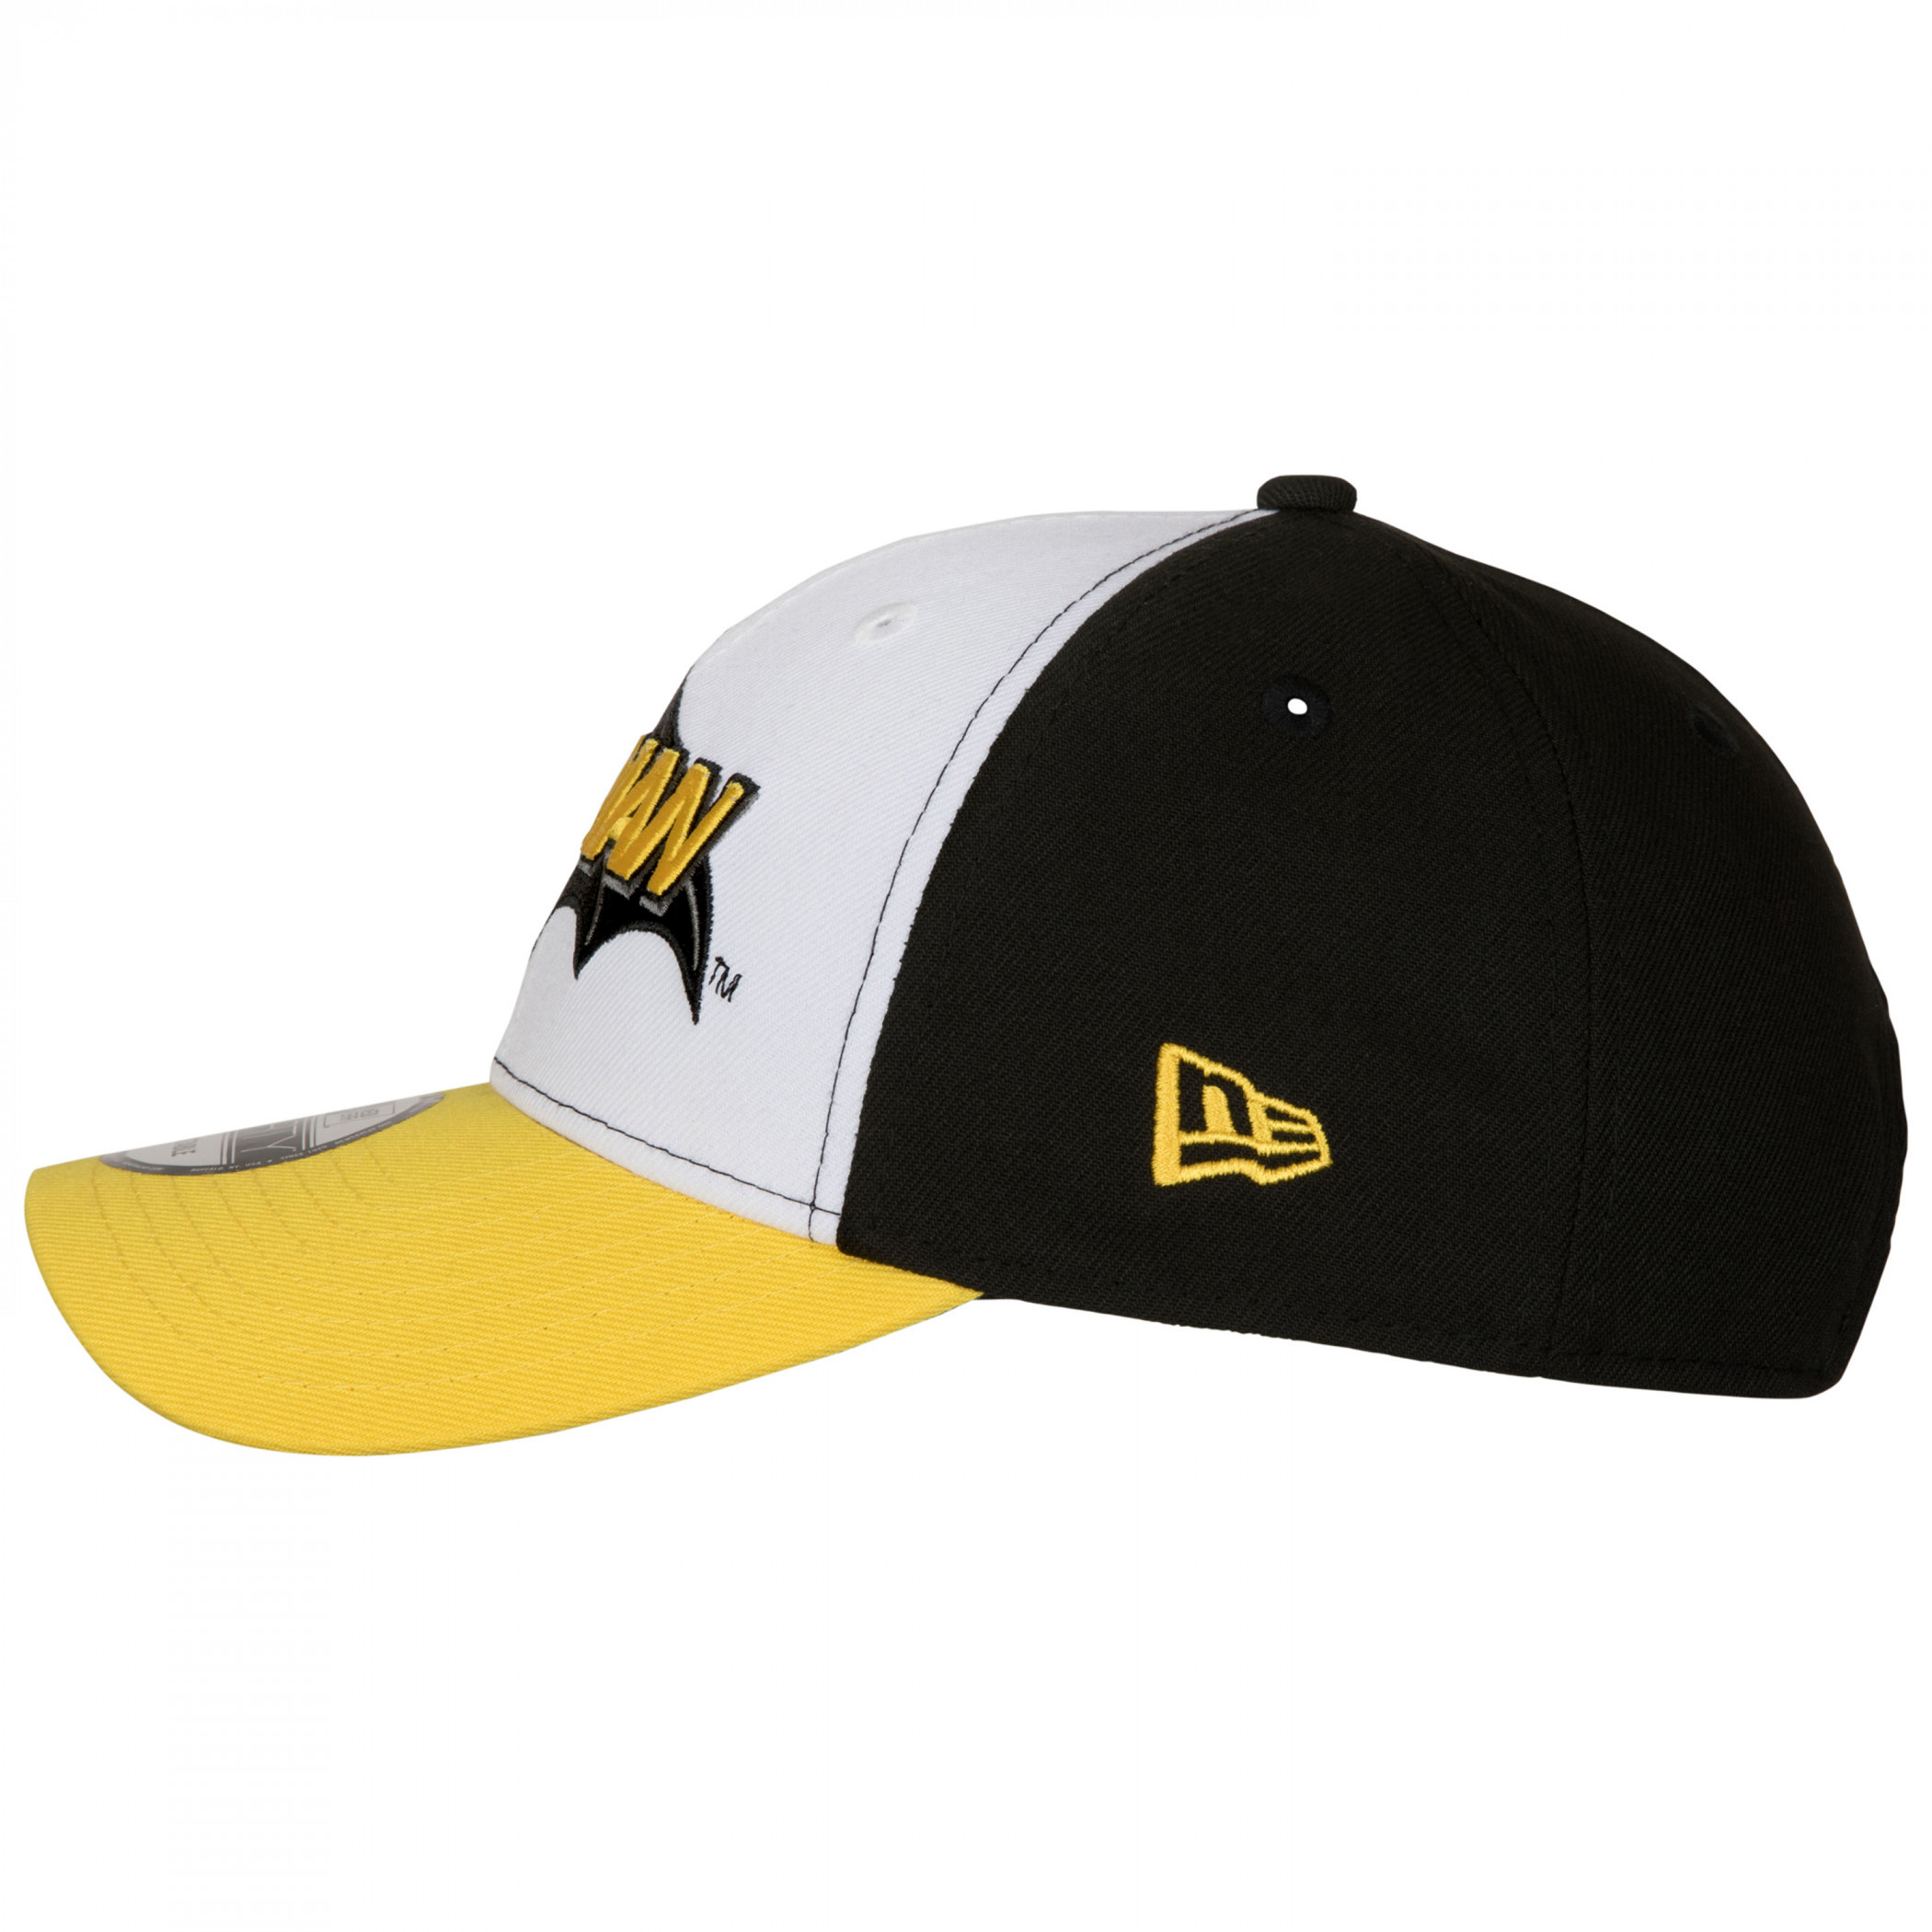 Batman Cape Logo New Era 9Forty Adjustable Hat